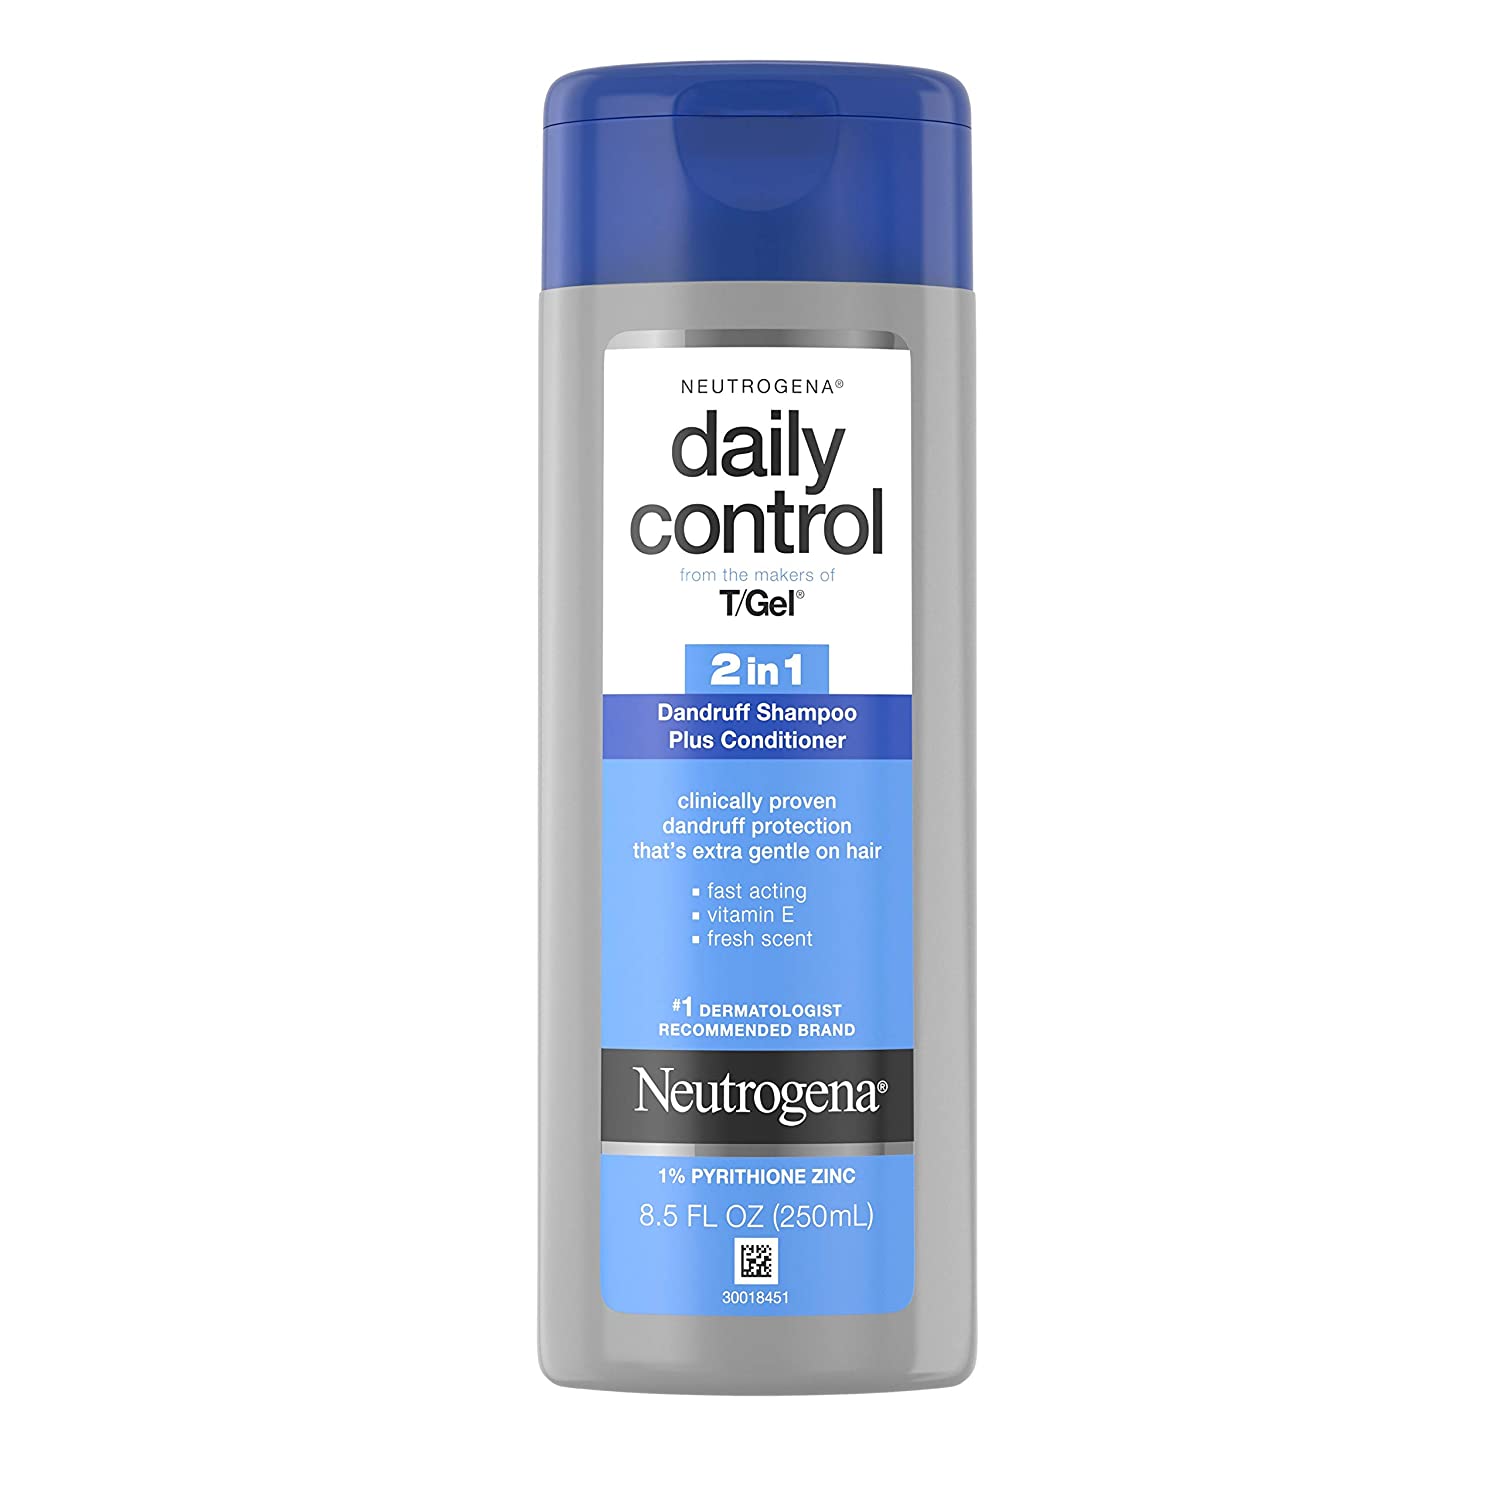  5. Neutrogena TGel Daily Control 2-in-1 Dandruff Shampoo Plus Conditioner (Best Drugstore) 